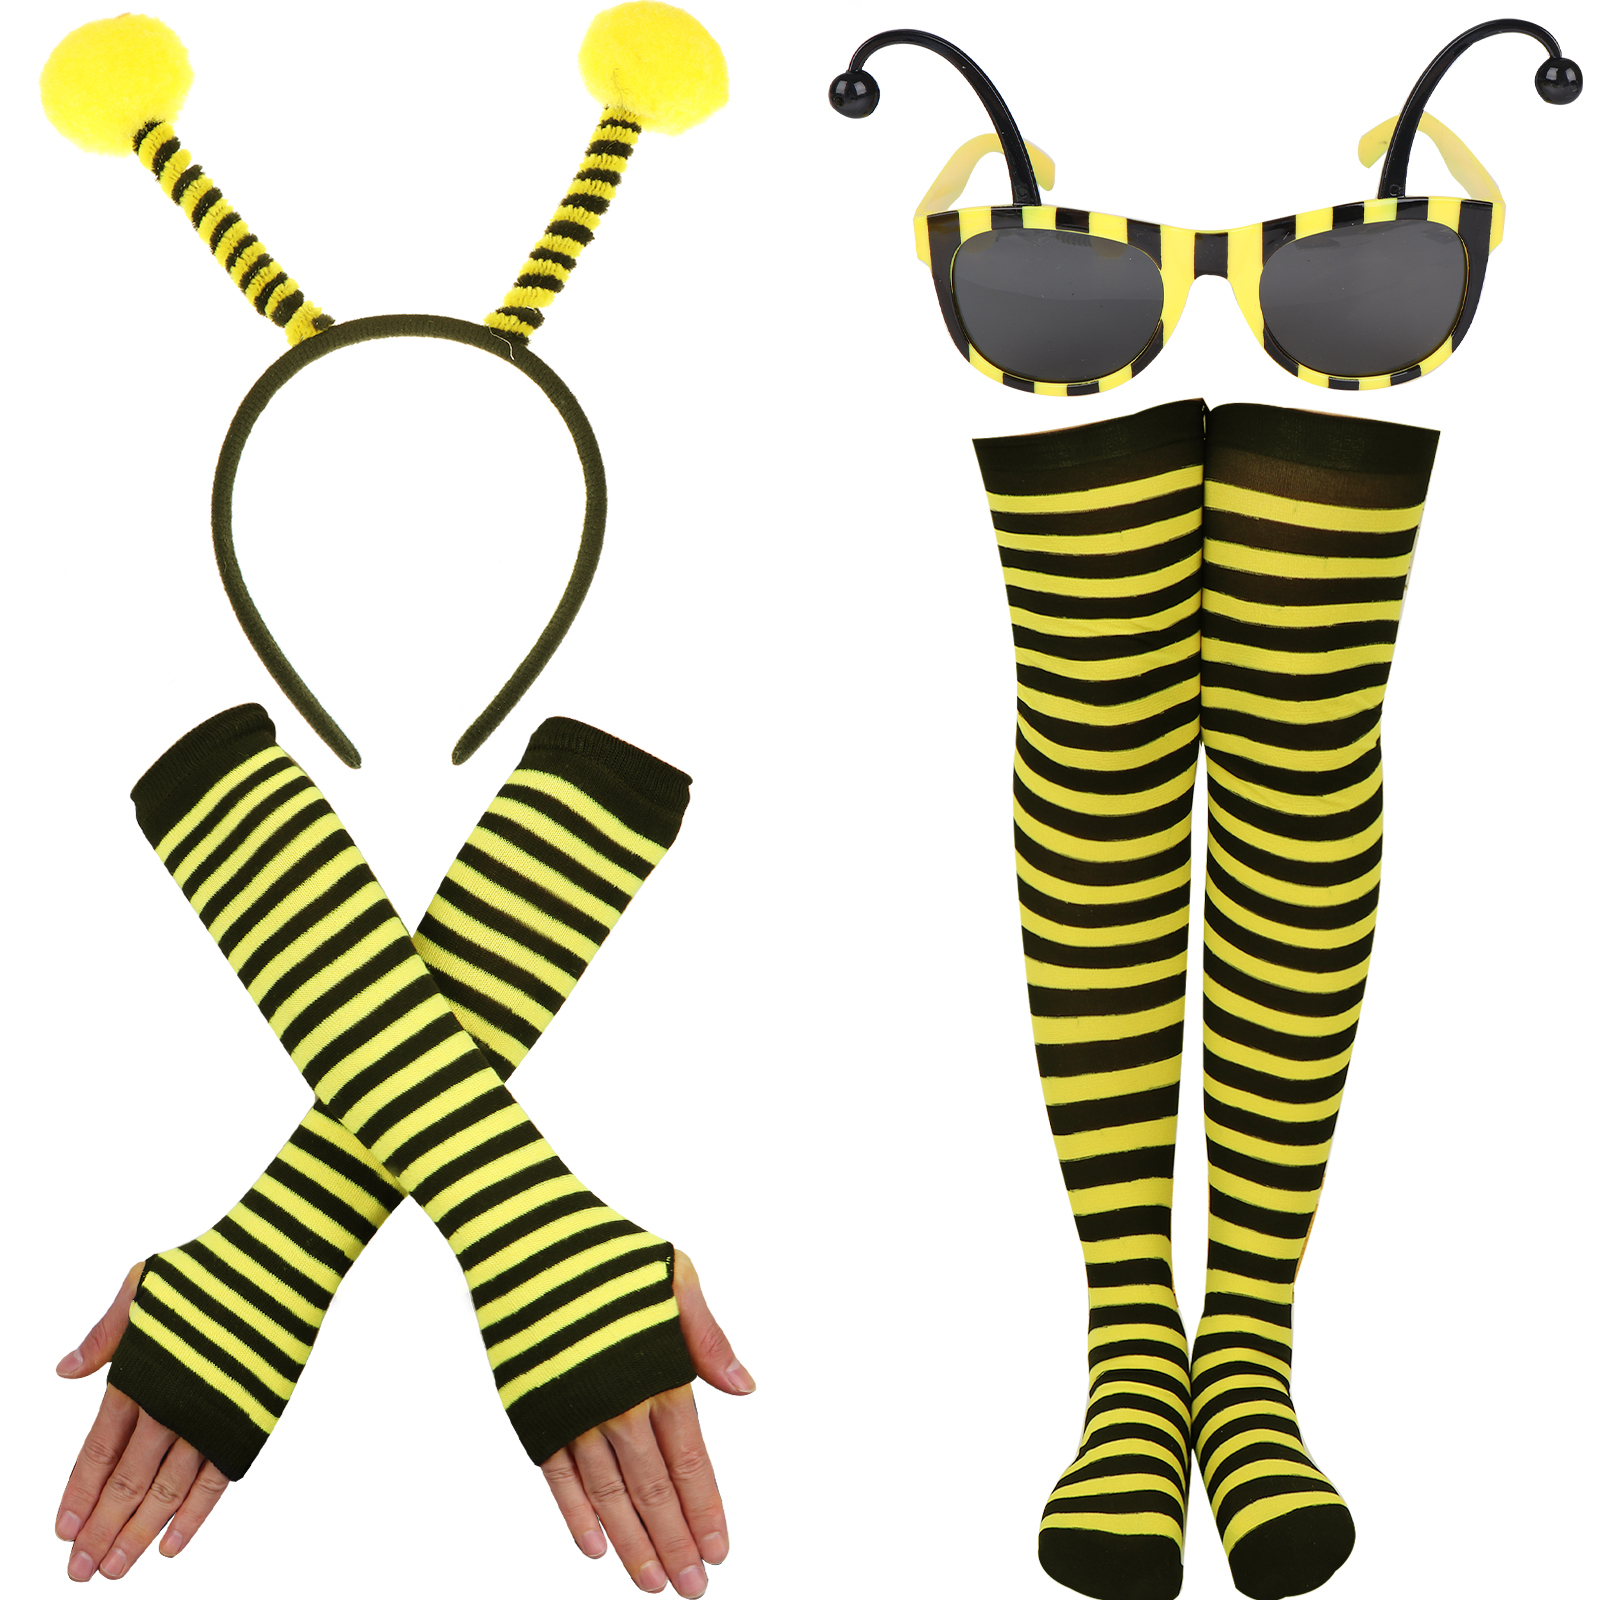 The Cutadornss Bumble Bee Costume Accessories Include Bee Antenna Headband